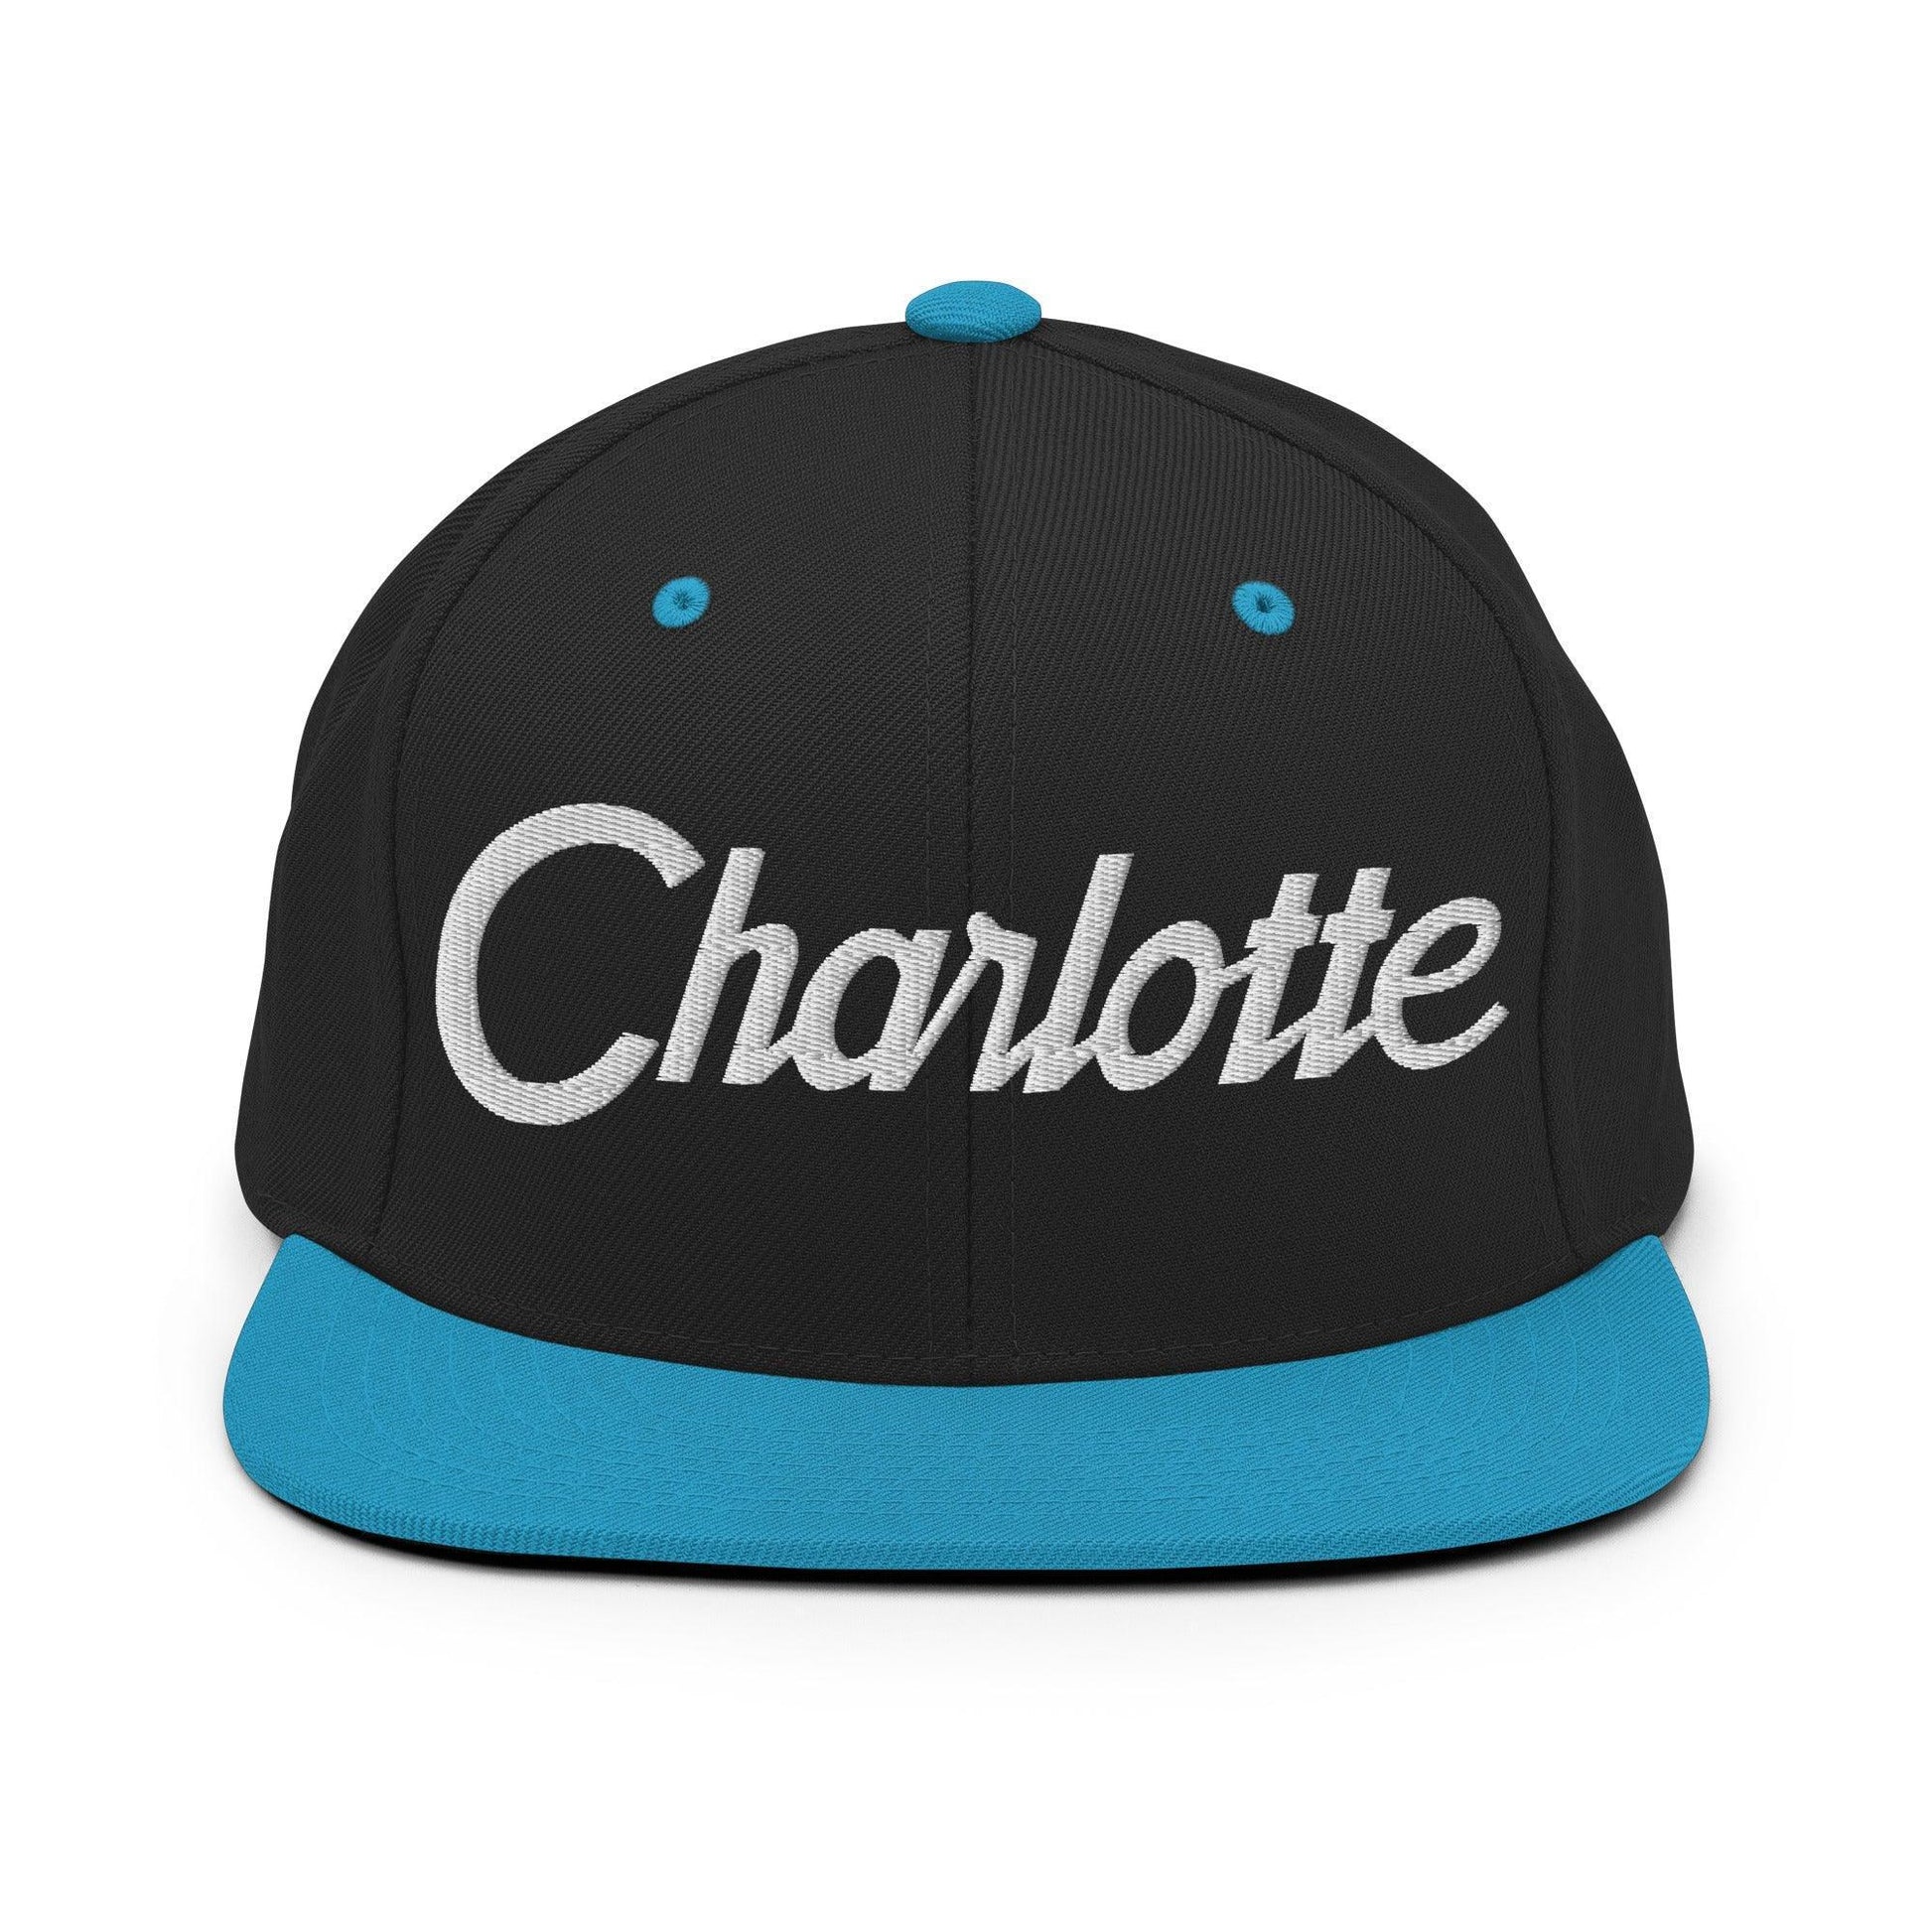 Charlotte Script Snapback Hat Black Teal